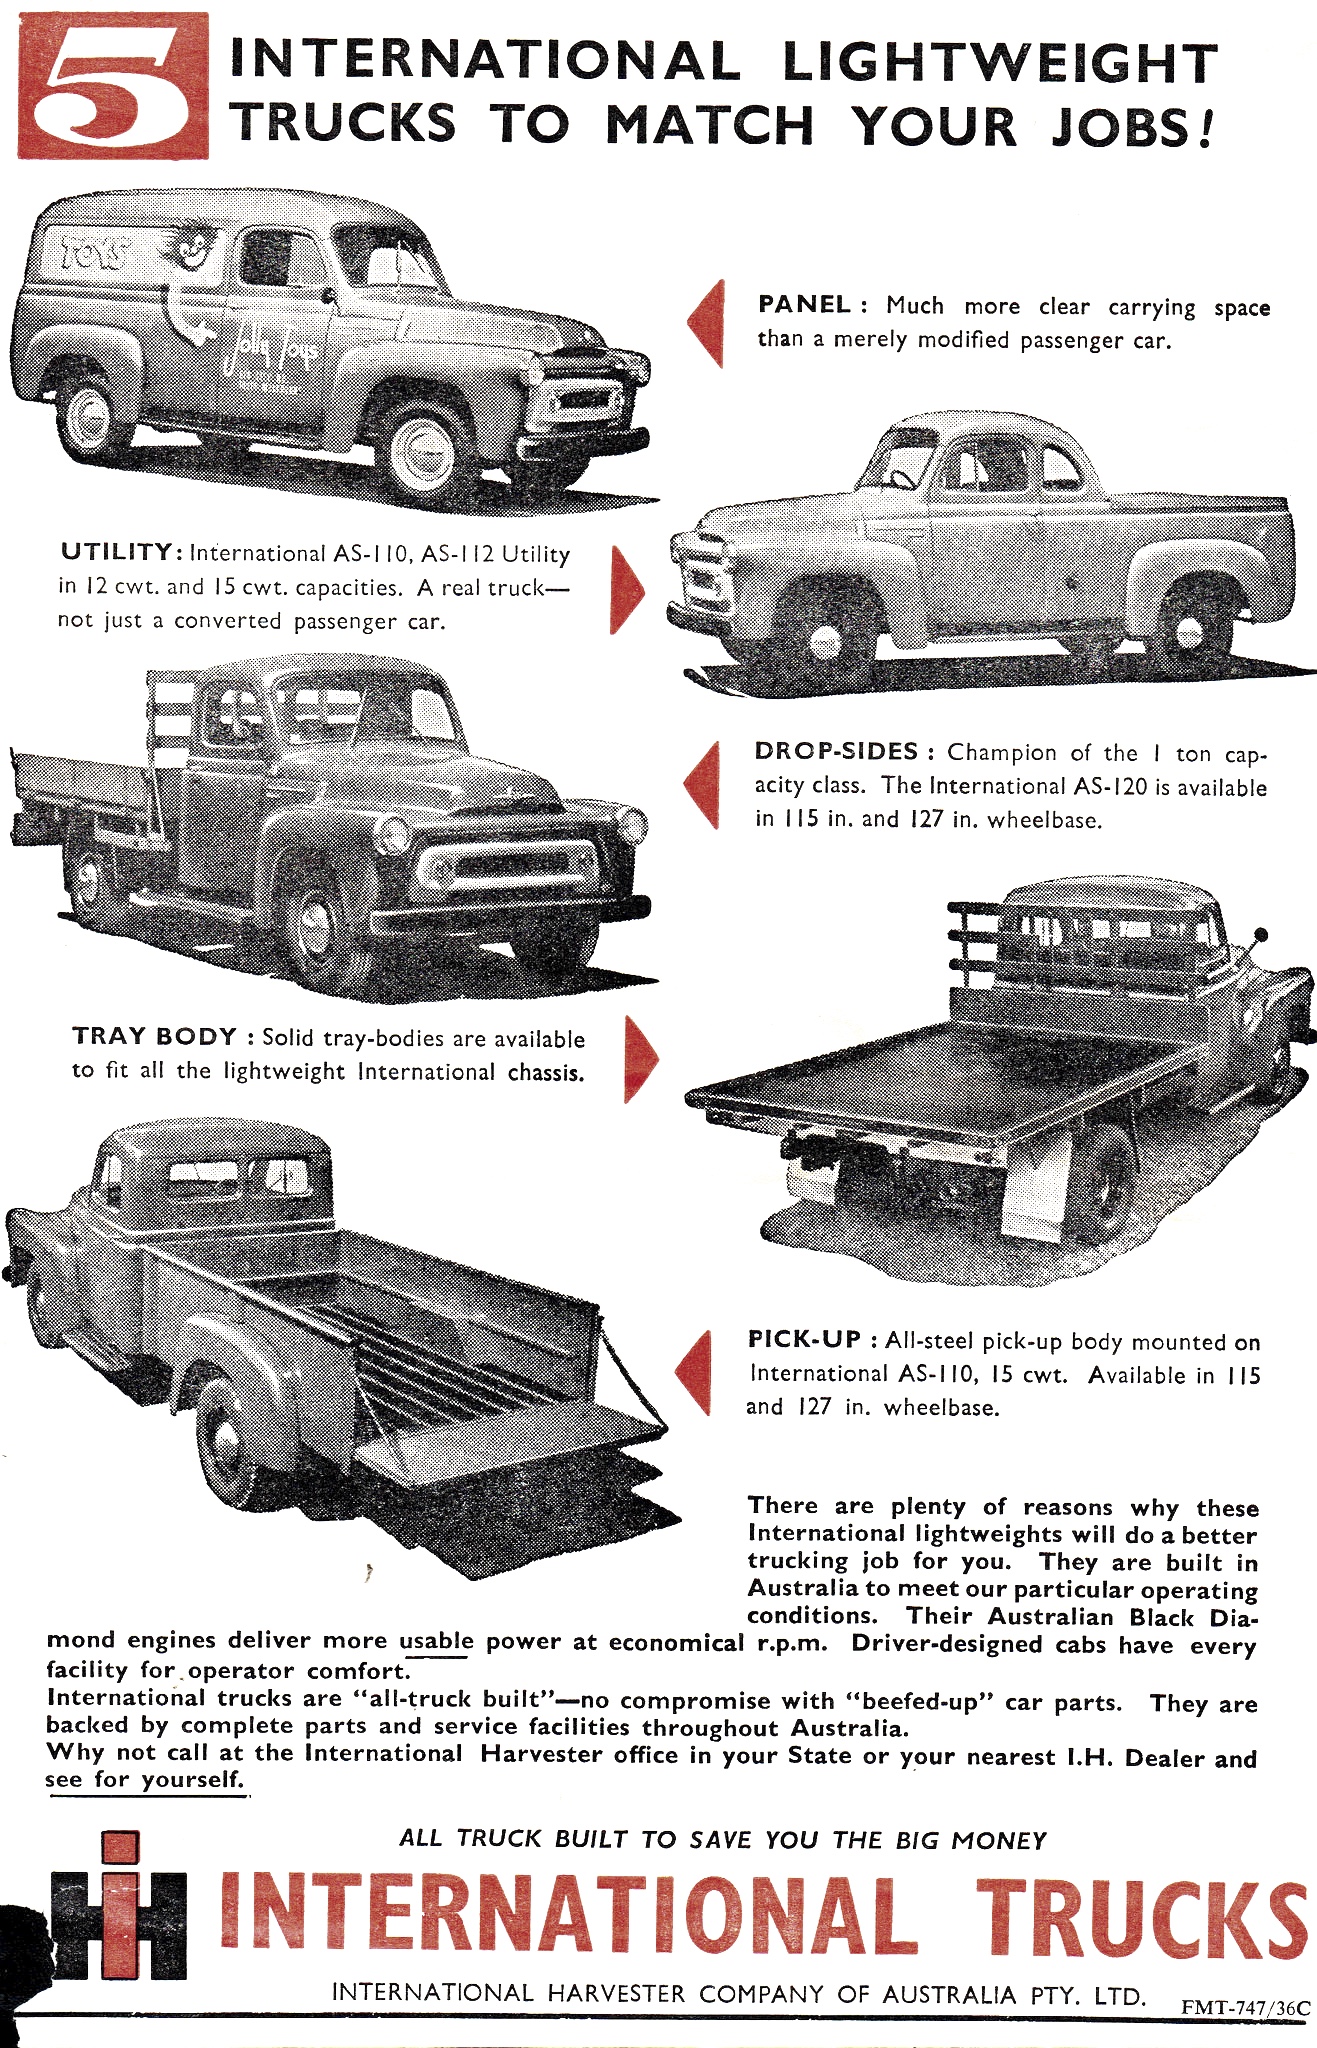 1957 International Harvester Panel Utility Dropsides Tray 